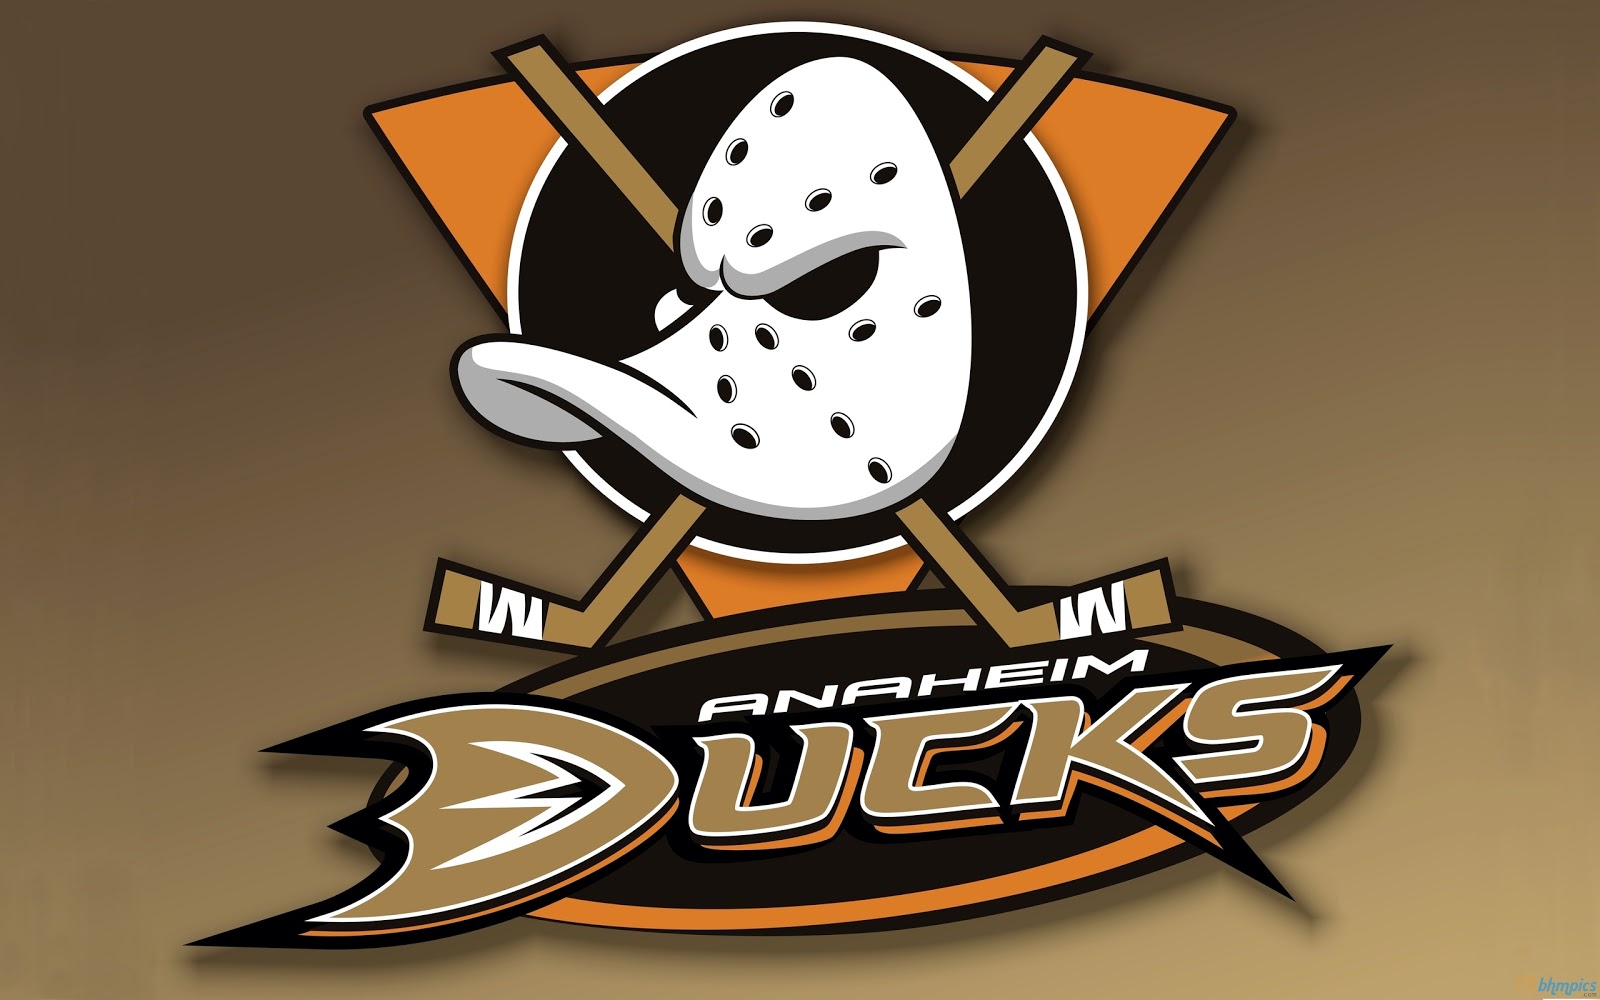 Anaheim Ducks Wallpaper